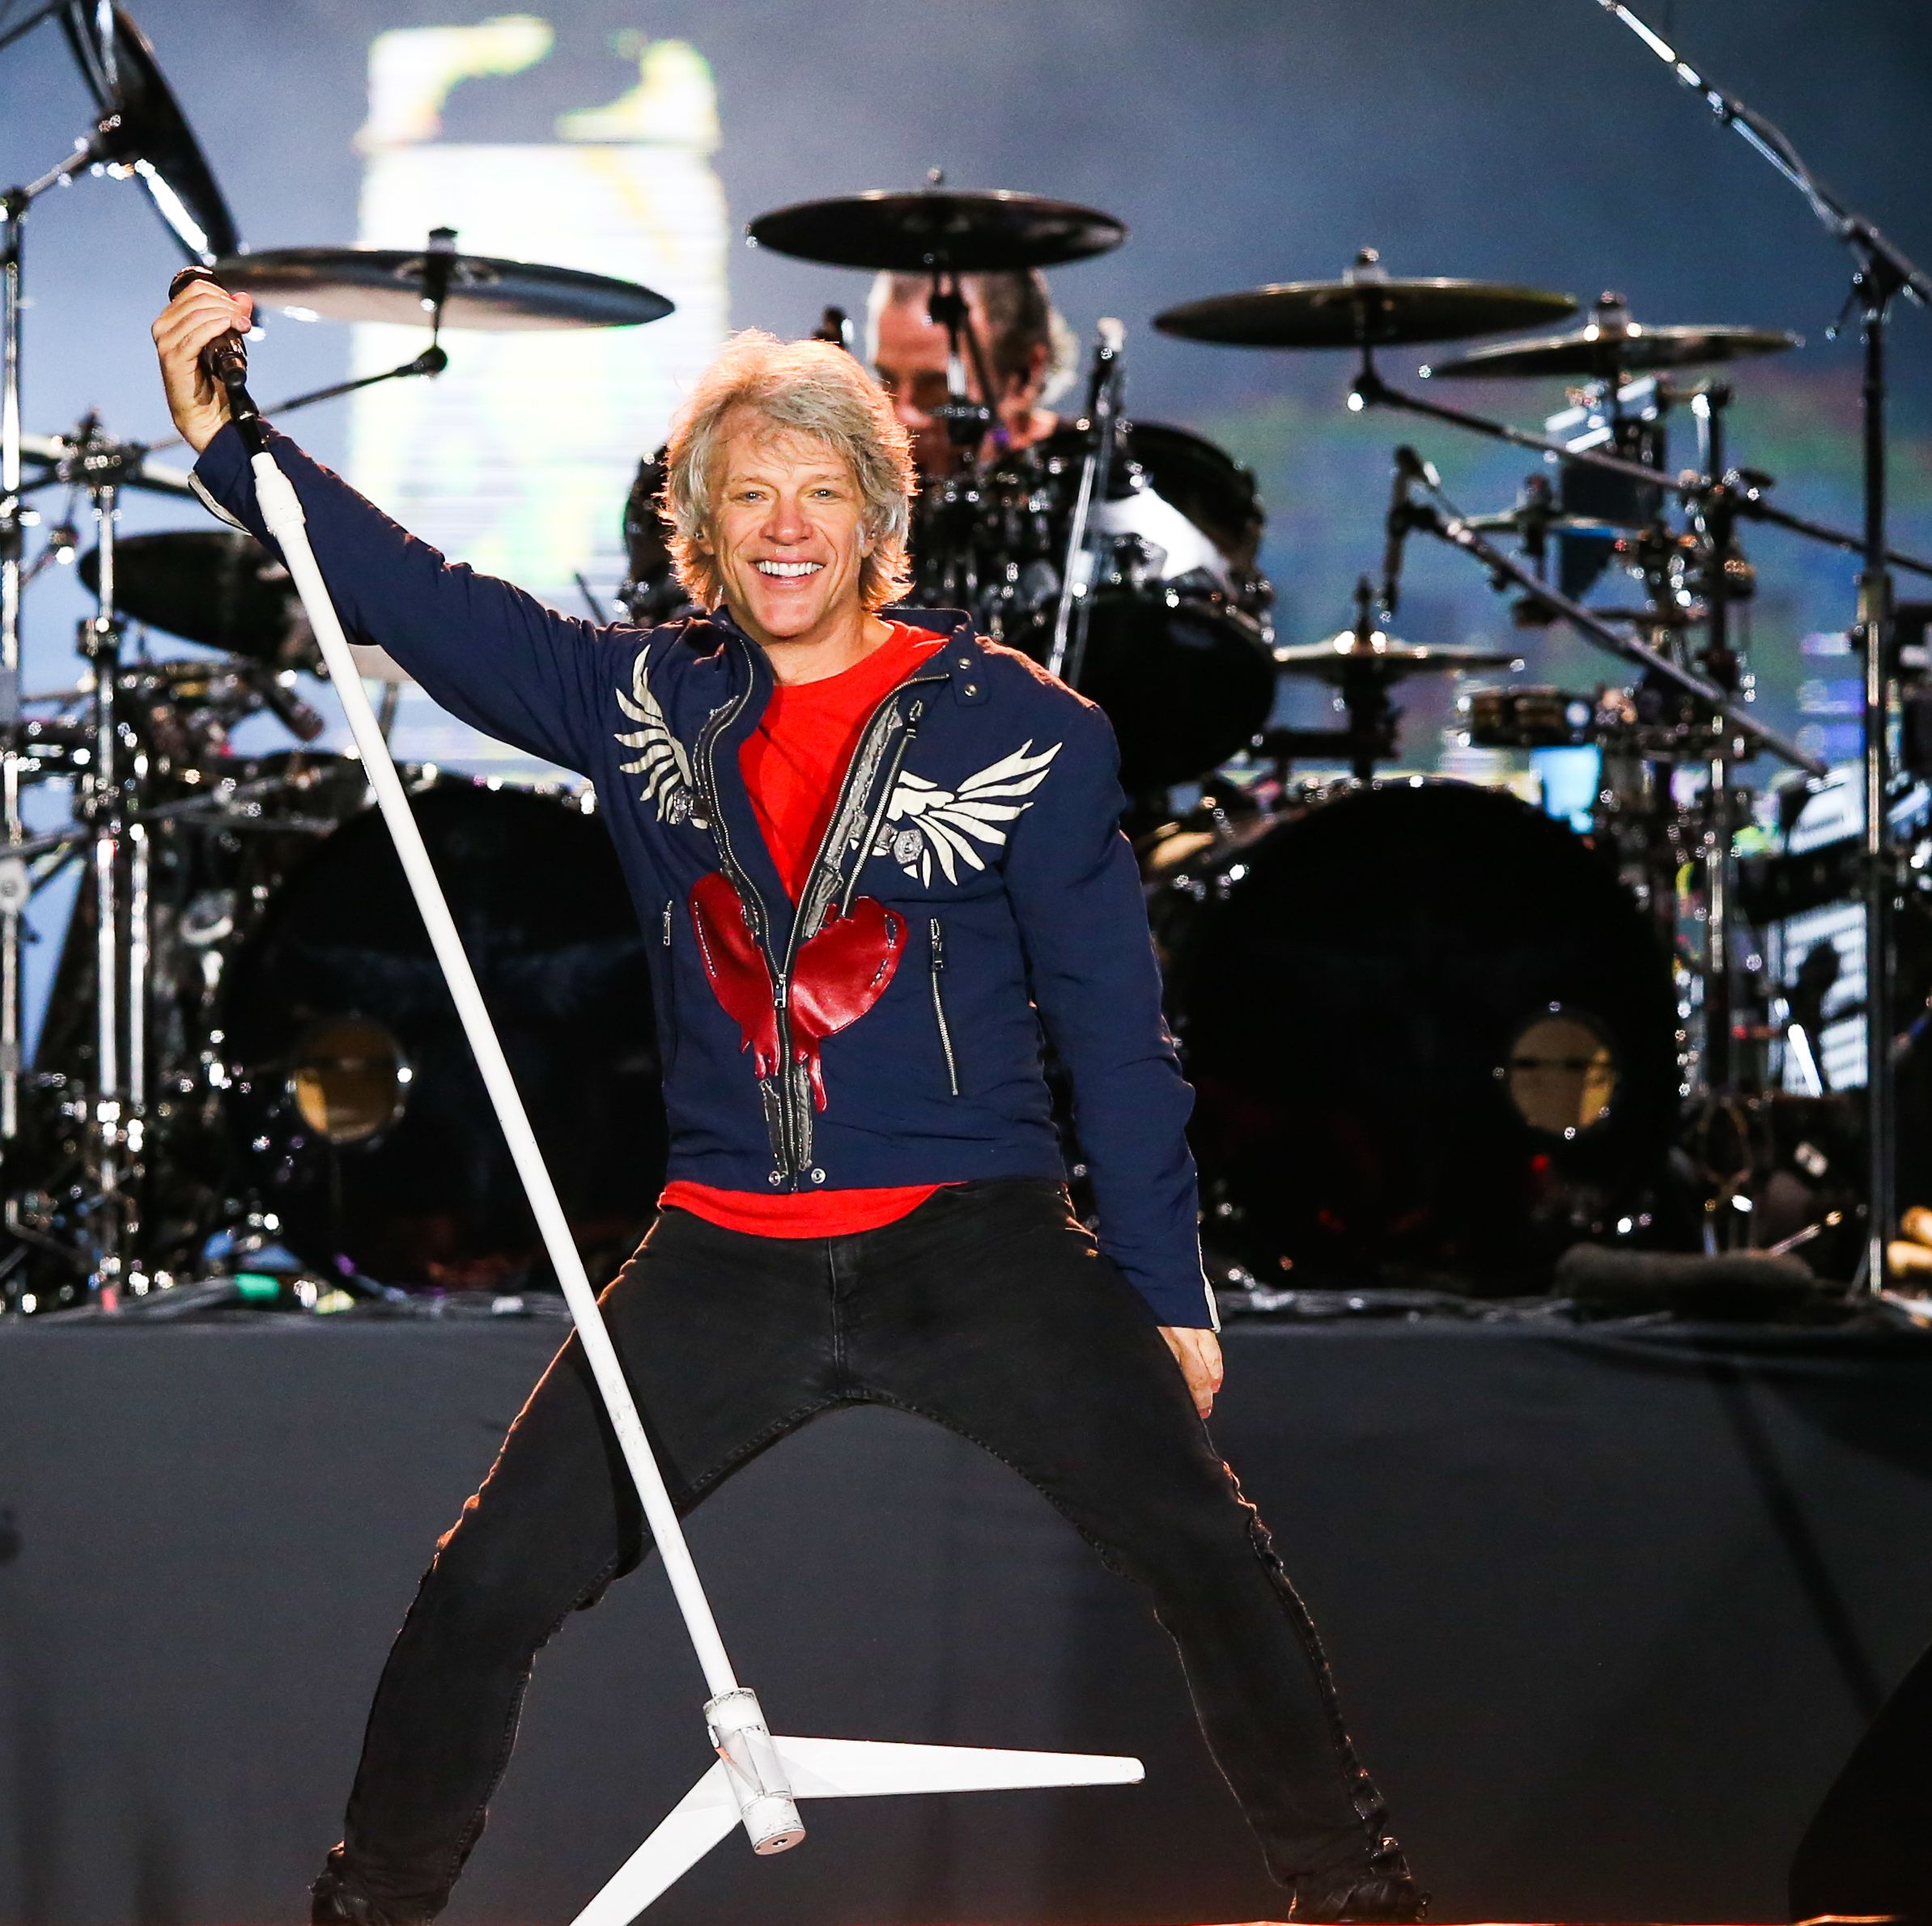 Super Bowl Organizers Are Keeping Halftime Rehearsals Secret By Blasting Jon Bon Jovi 24/7